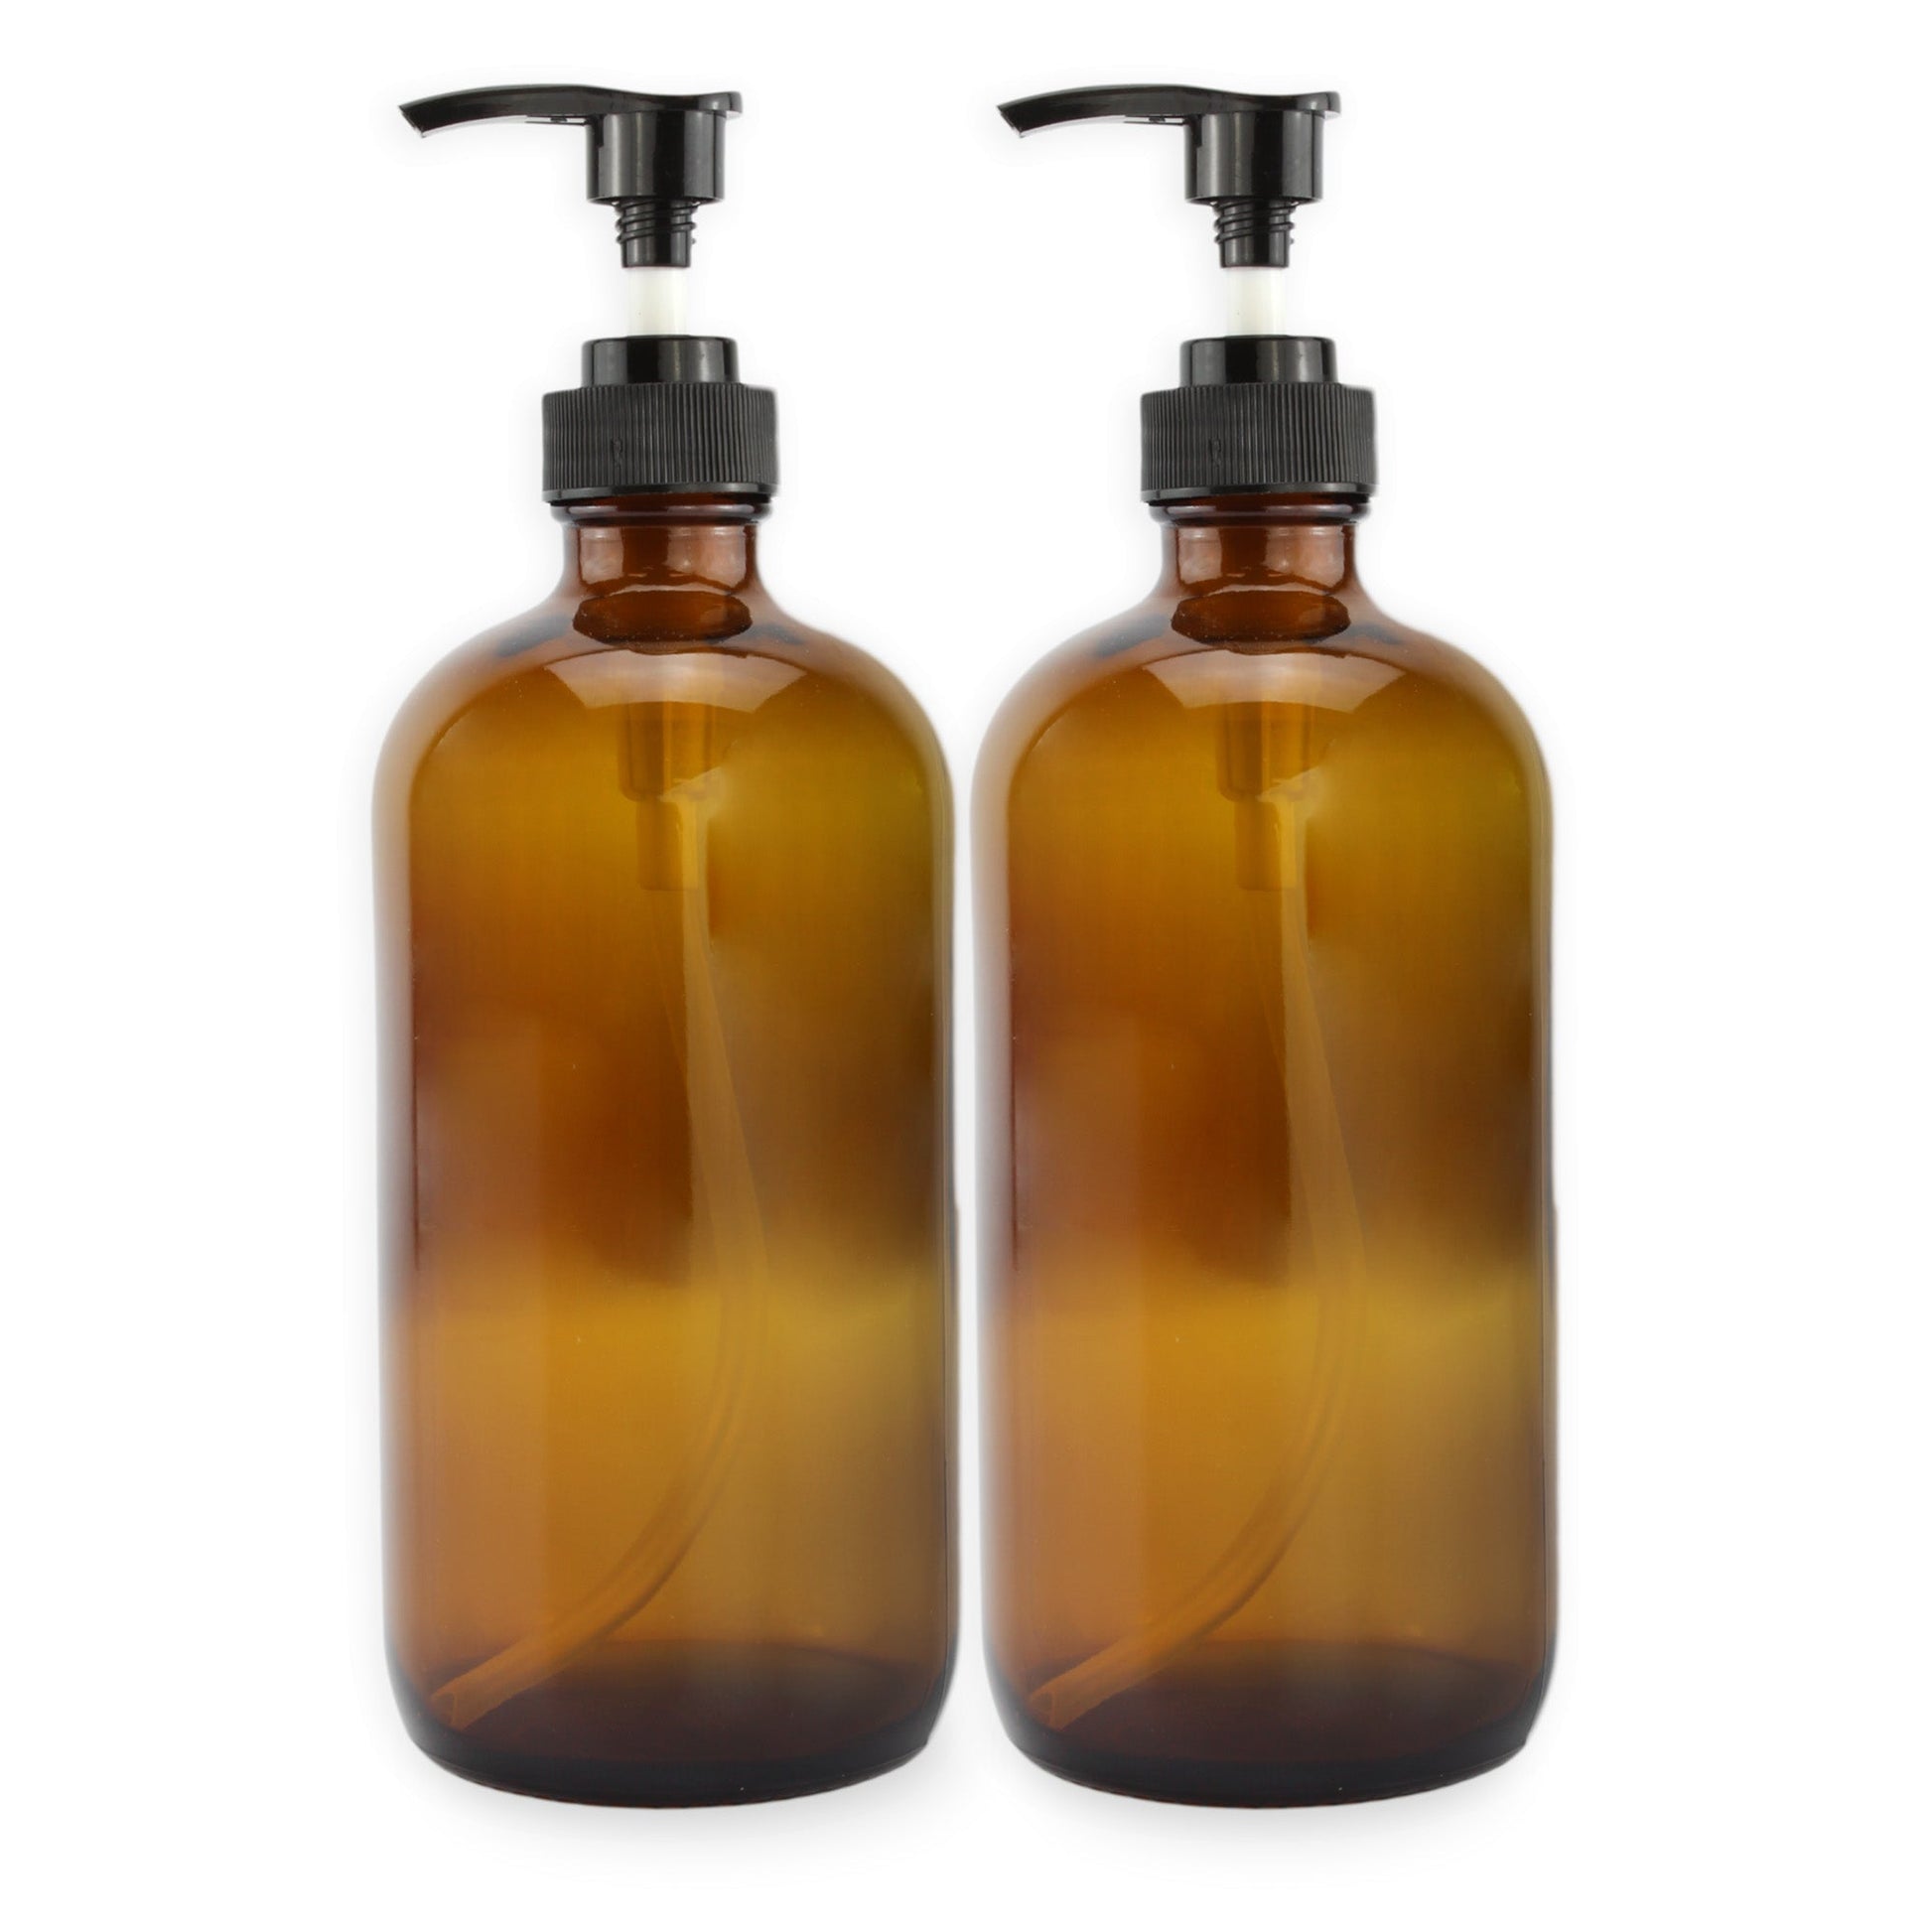 16oz Amber Glass Bottles w/ Pump Dispensers (2-Pack) - sh1182cb016oz